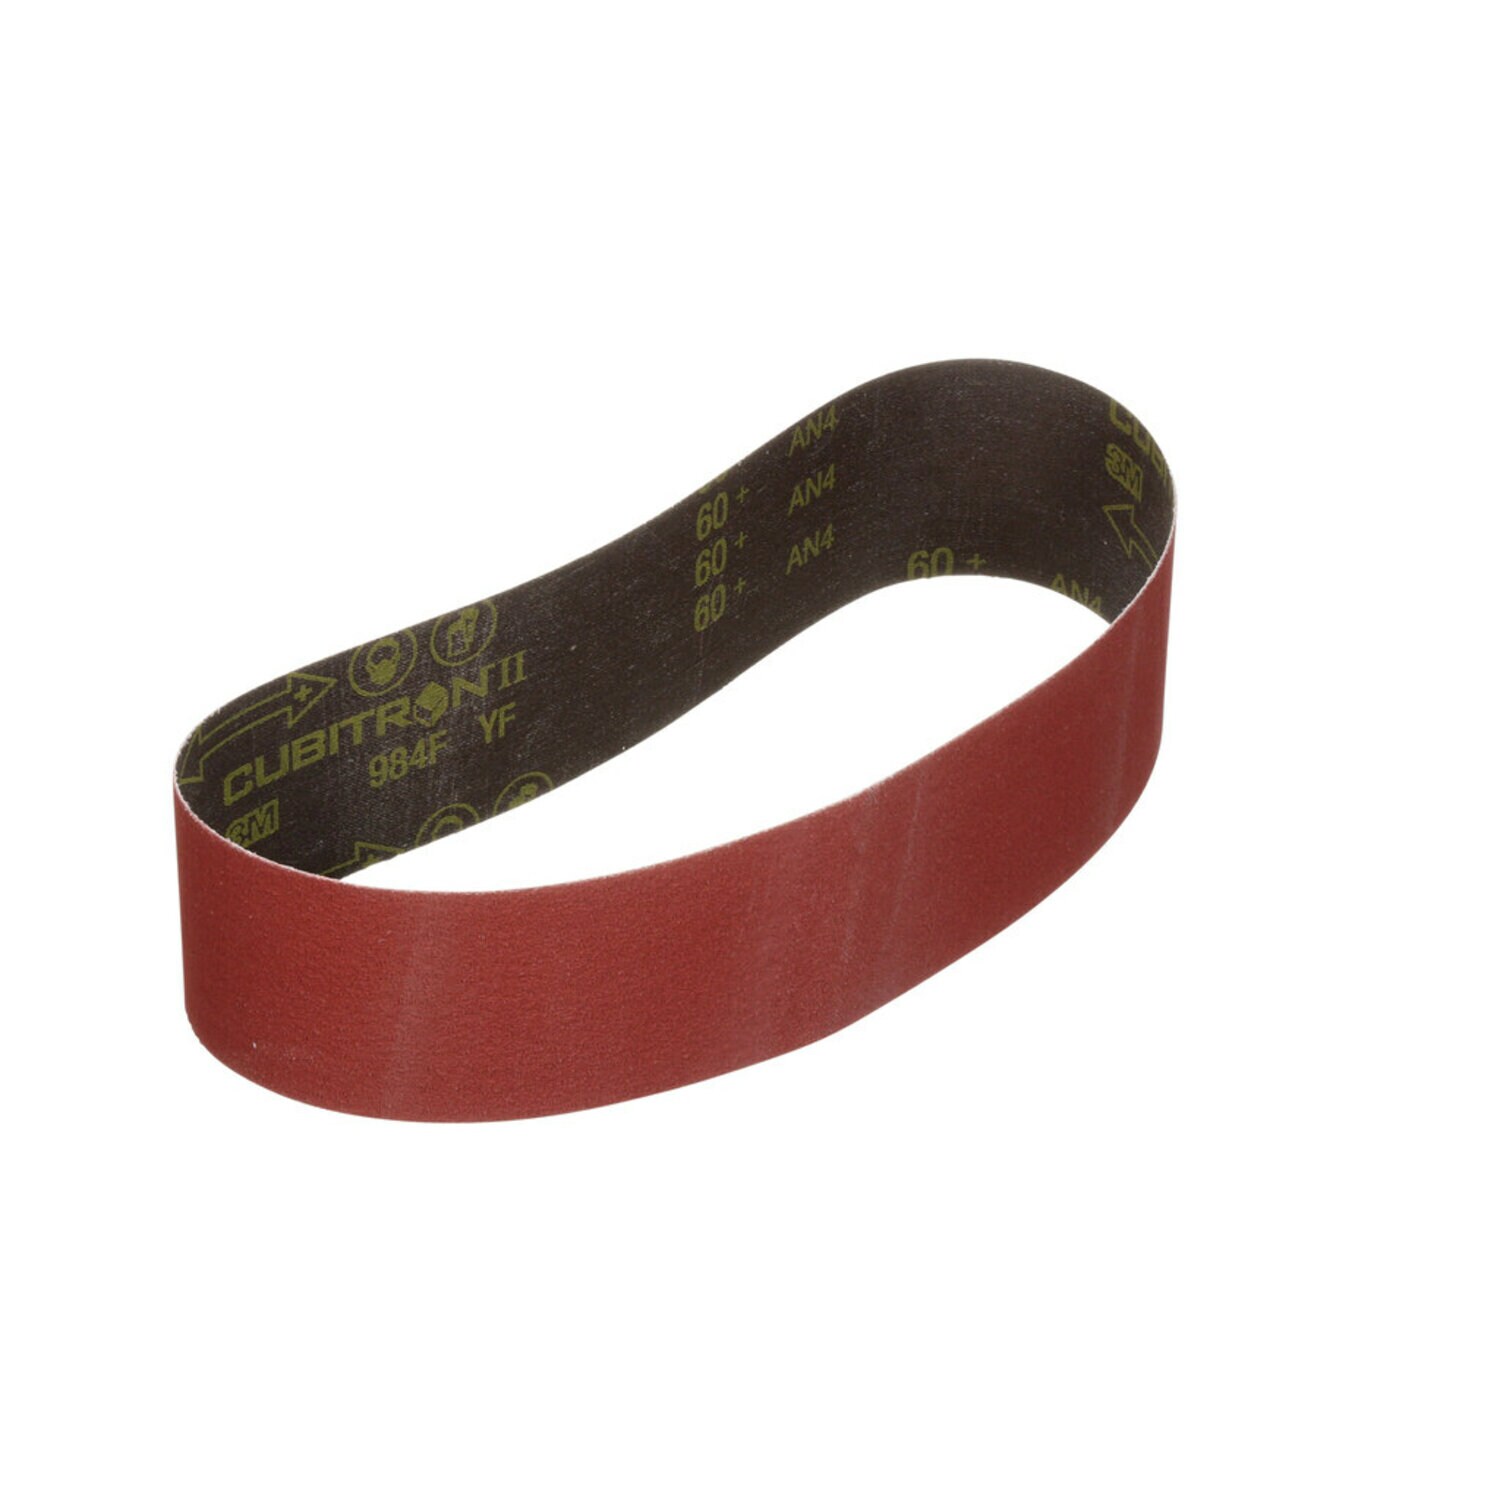 7010513743 - 3M Cubitron II Cloth Belt 984F, 120+ YF-weight, 25 in x 60 in,
Film-lok, Single-flex